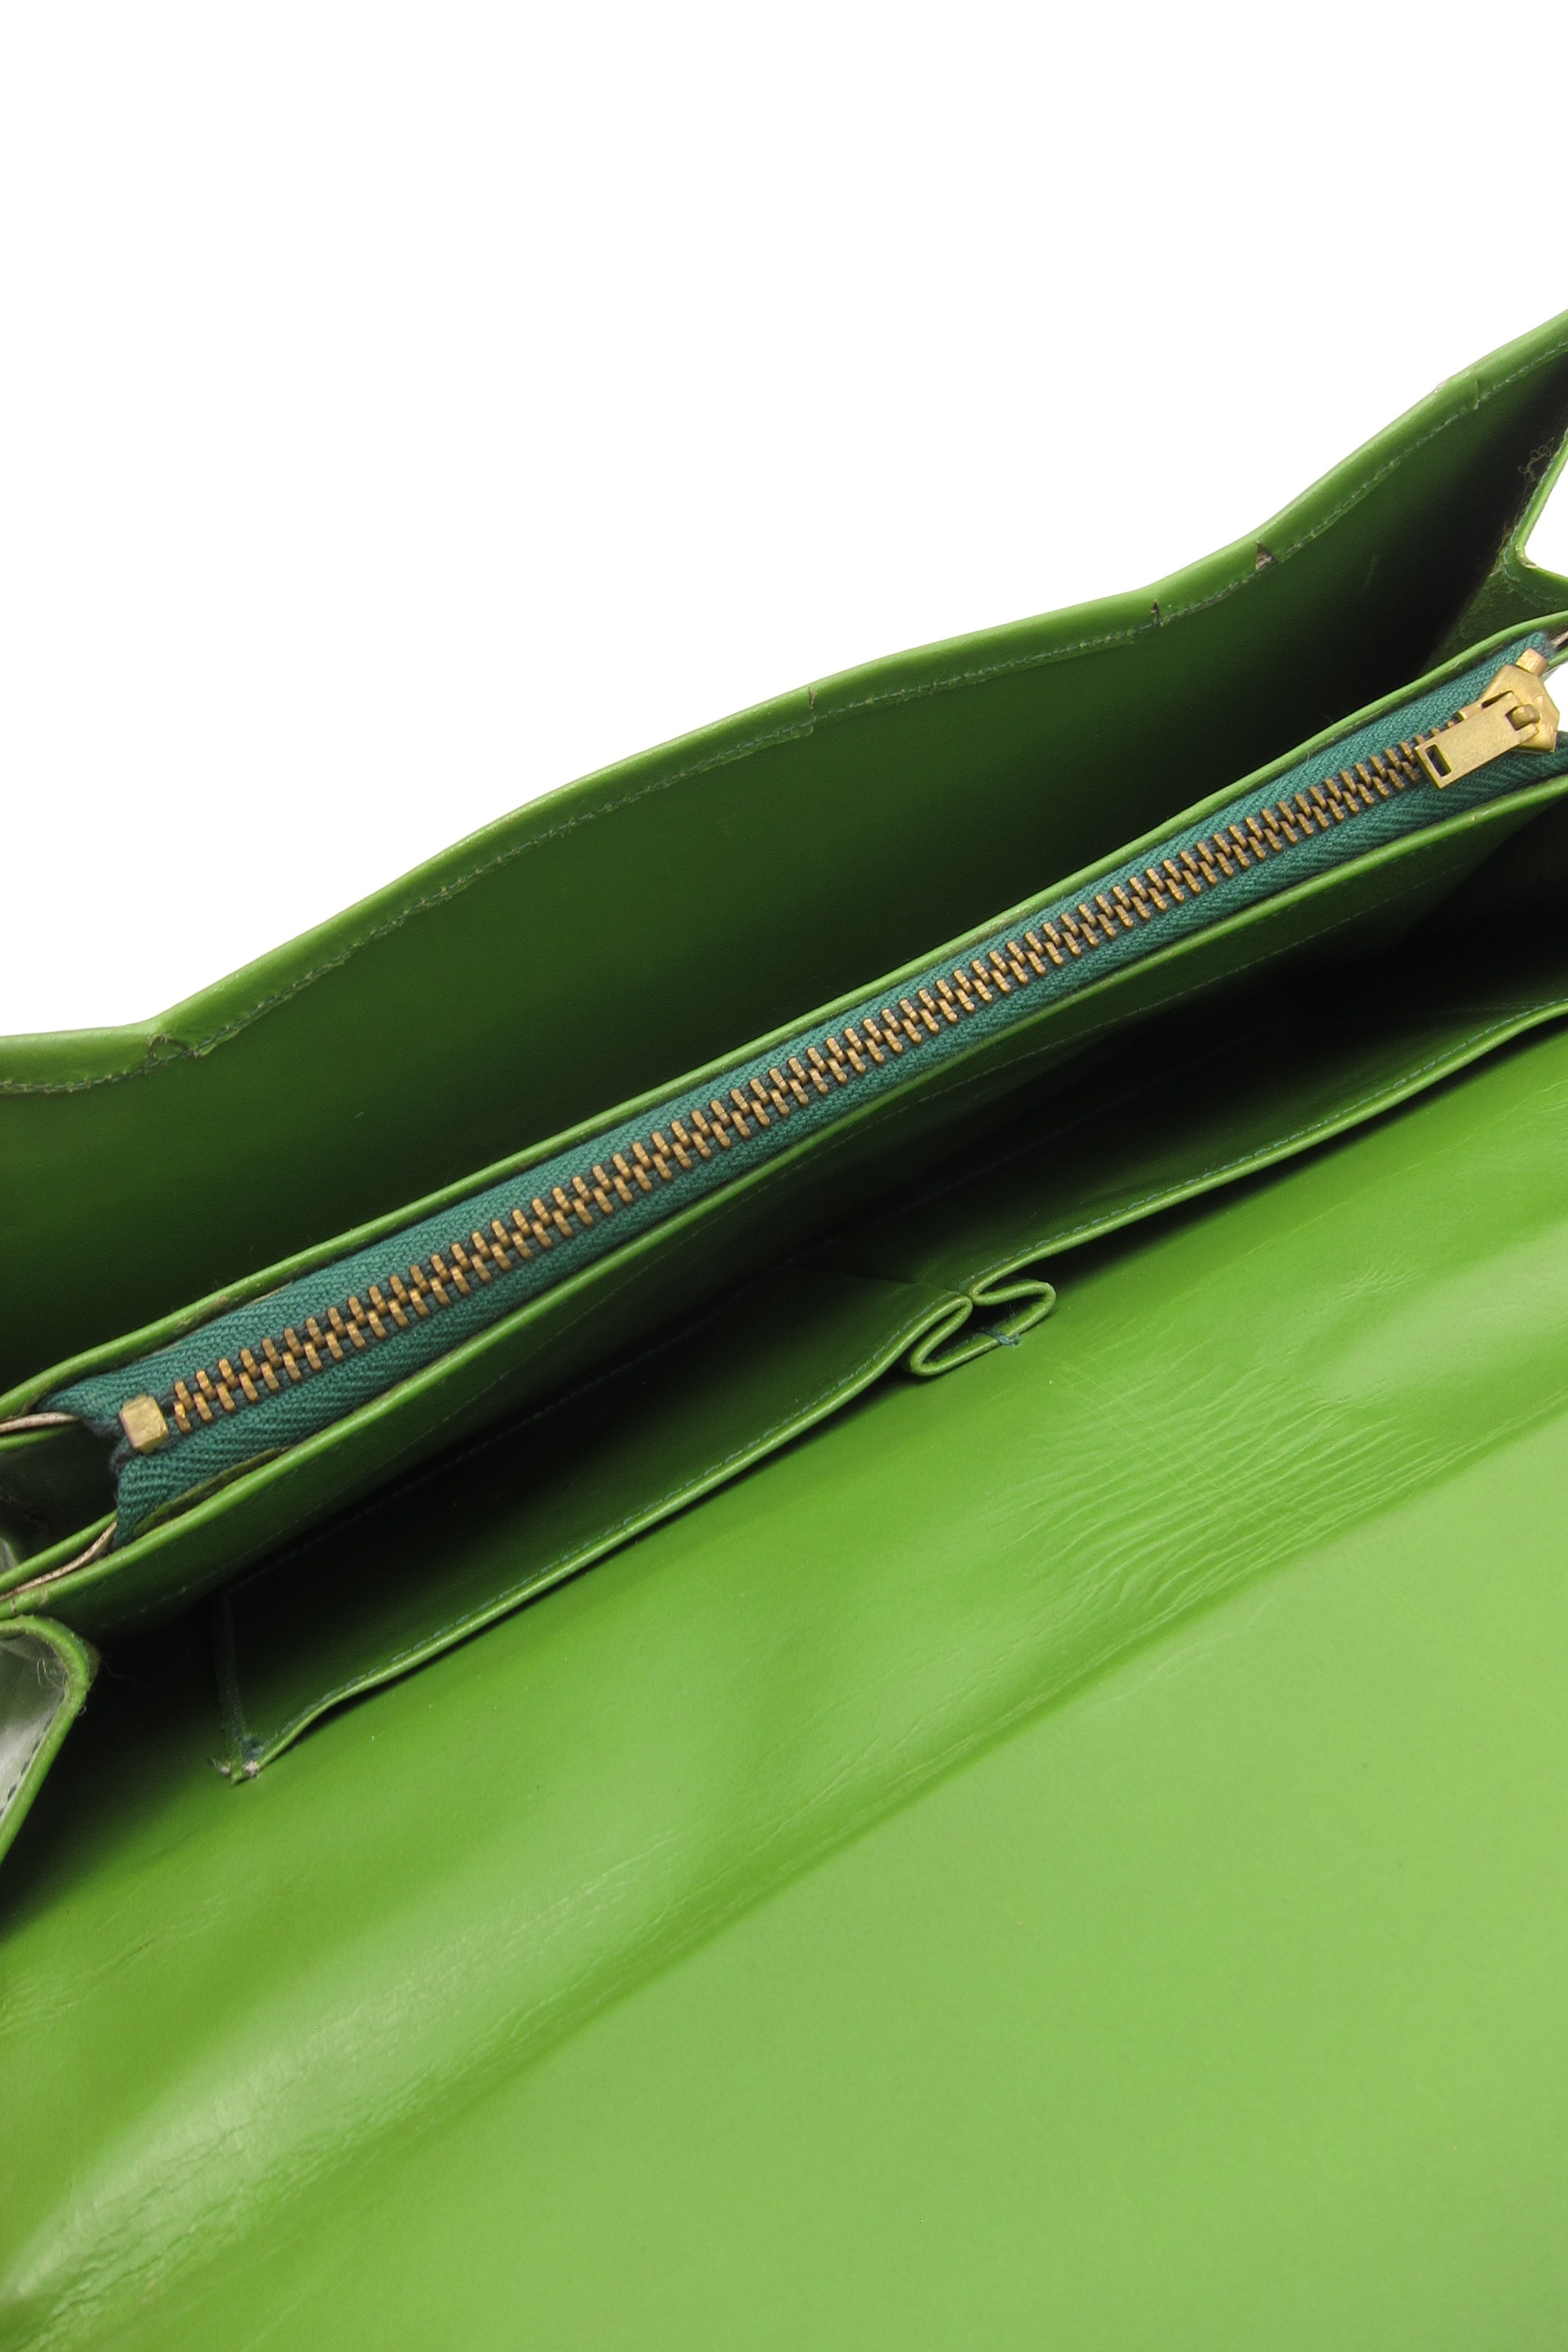 Leather STONE MOUNTAIN Handbag Satchel Purse Shoulder Bag Dark Green  Excellent | eBay